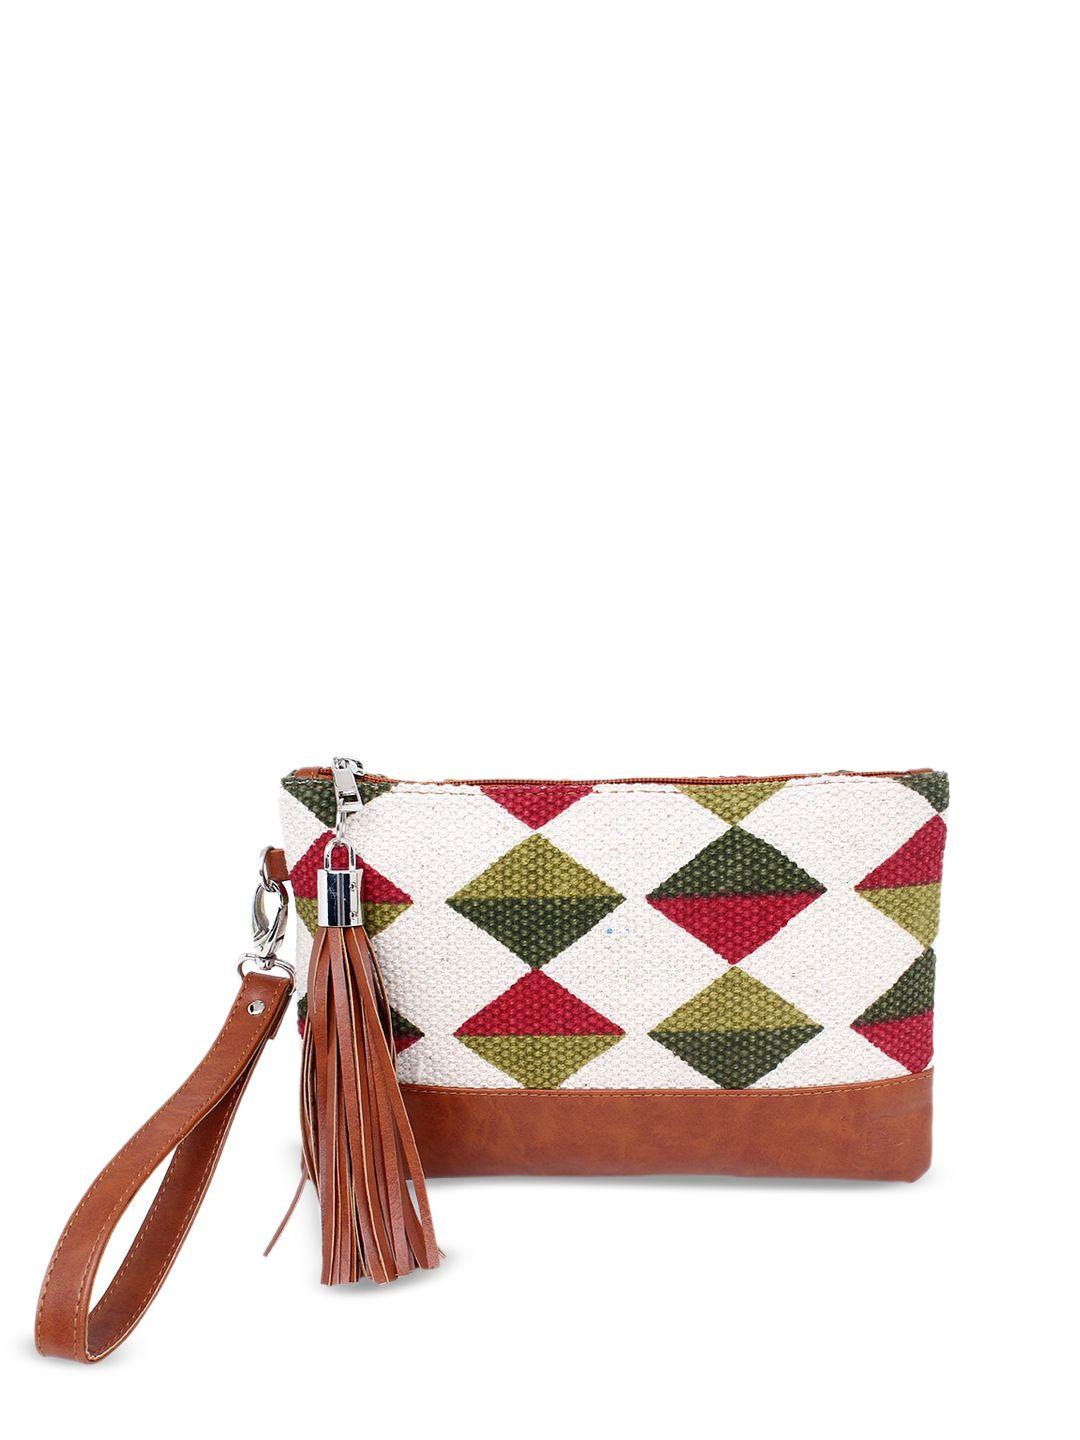 spice art women off-white & brown printed purse clutch